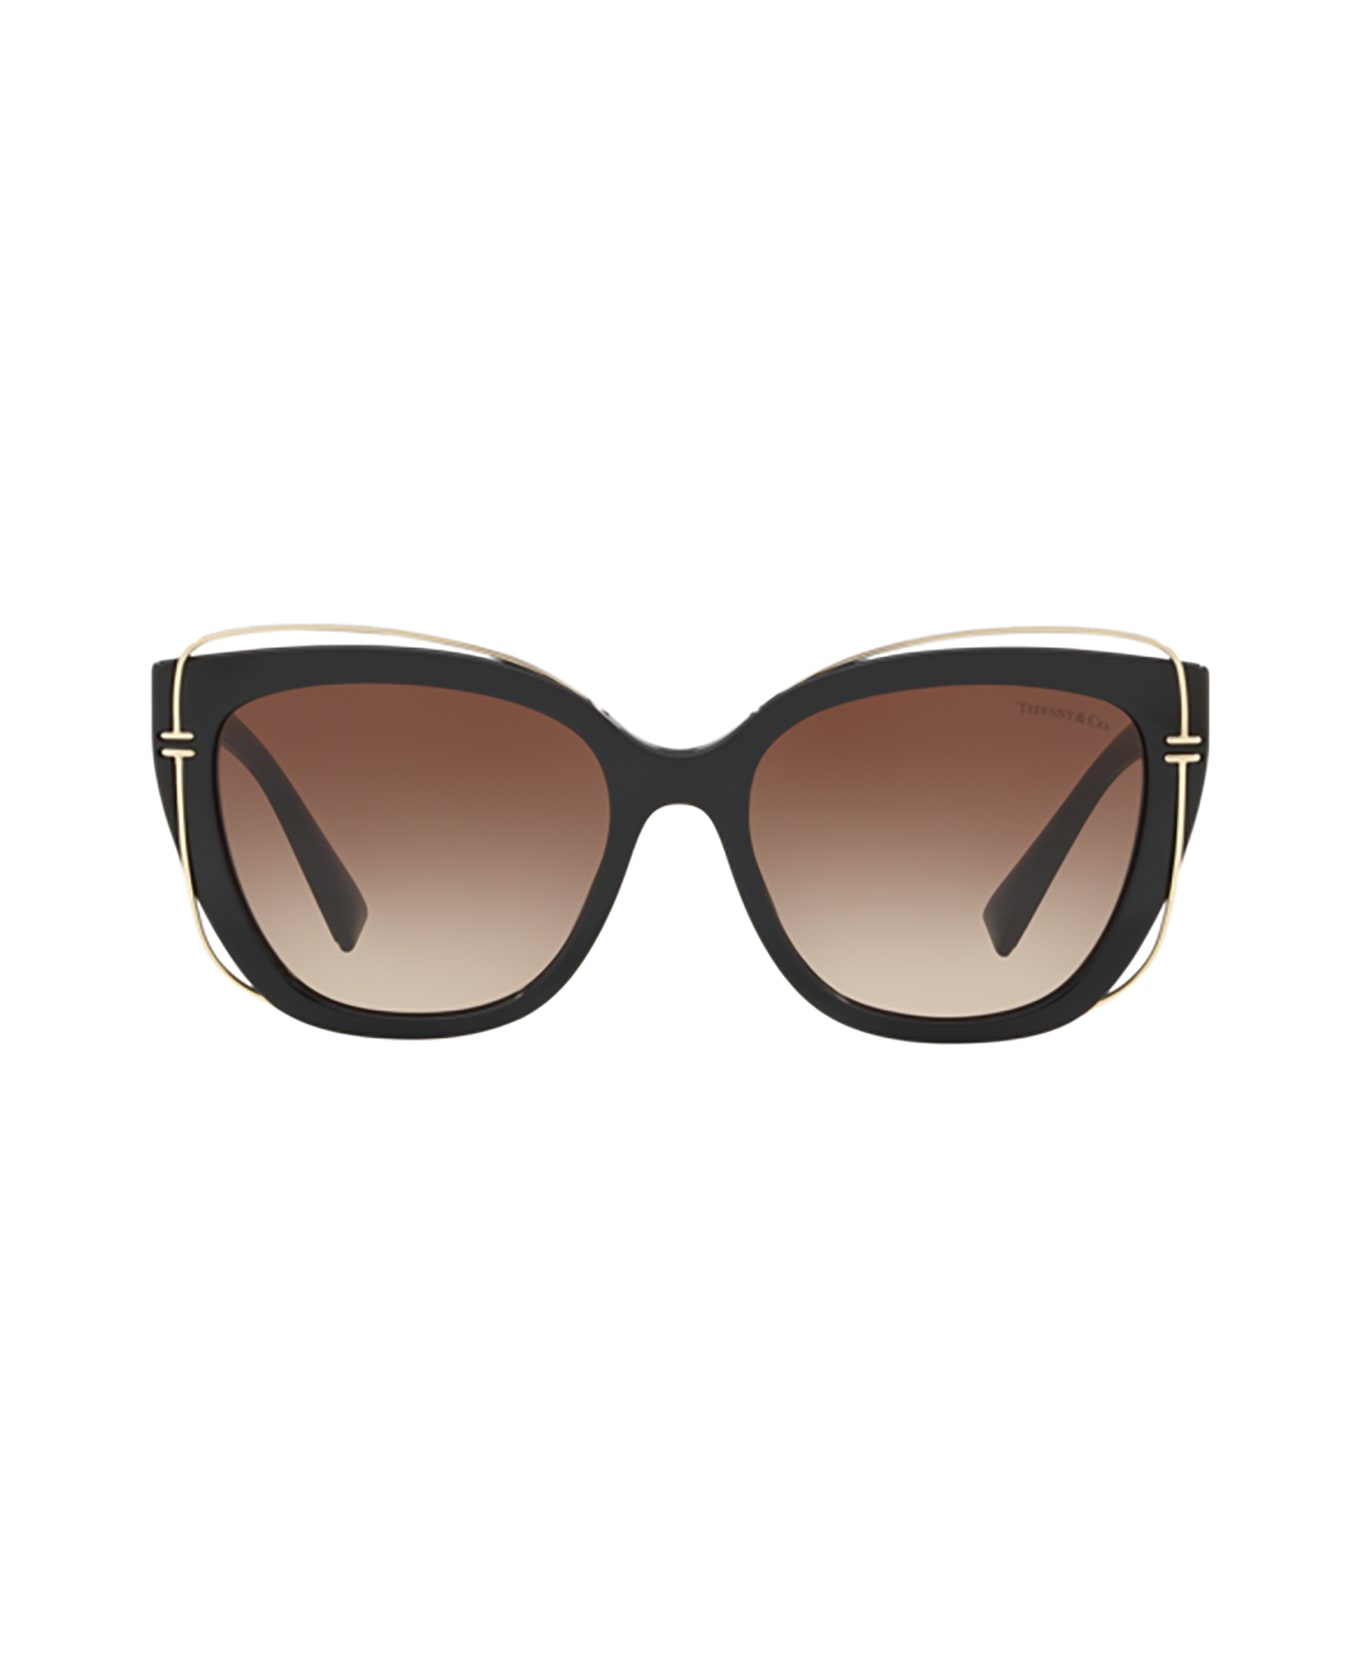 Tiffany & Co. Tf4148 Black Sunglasses - Black サングラス